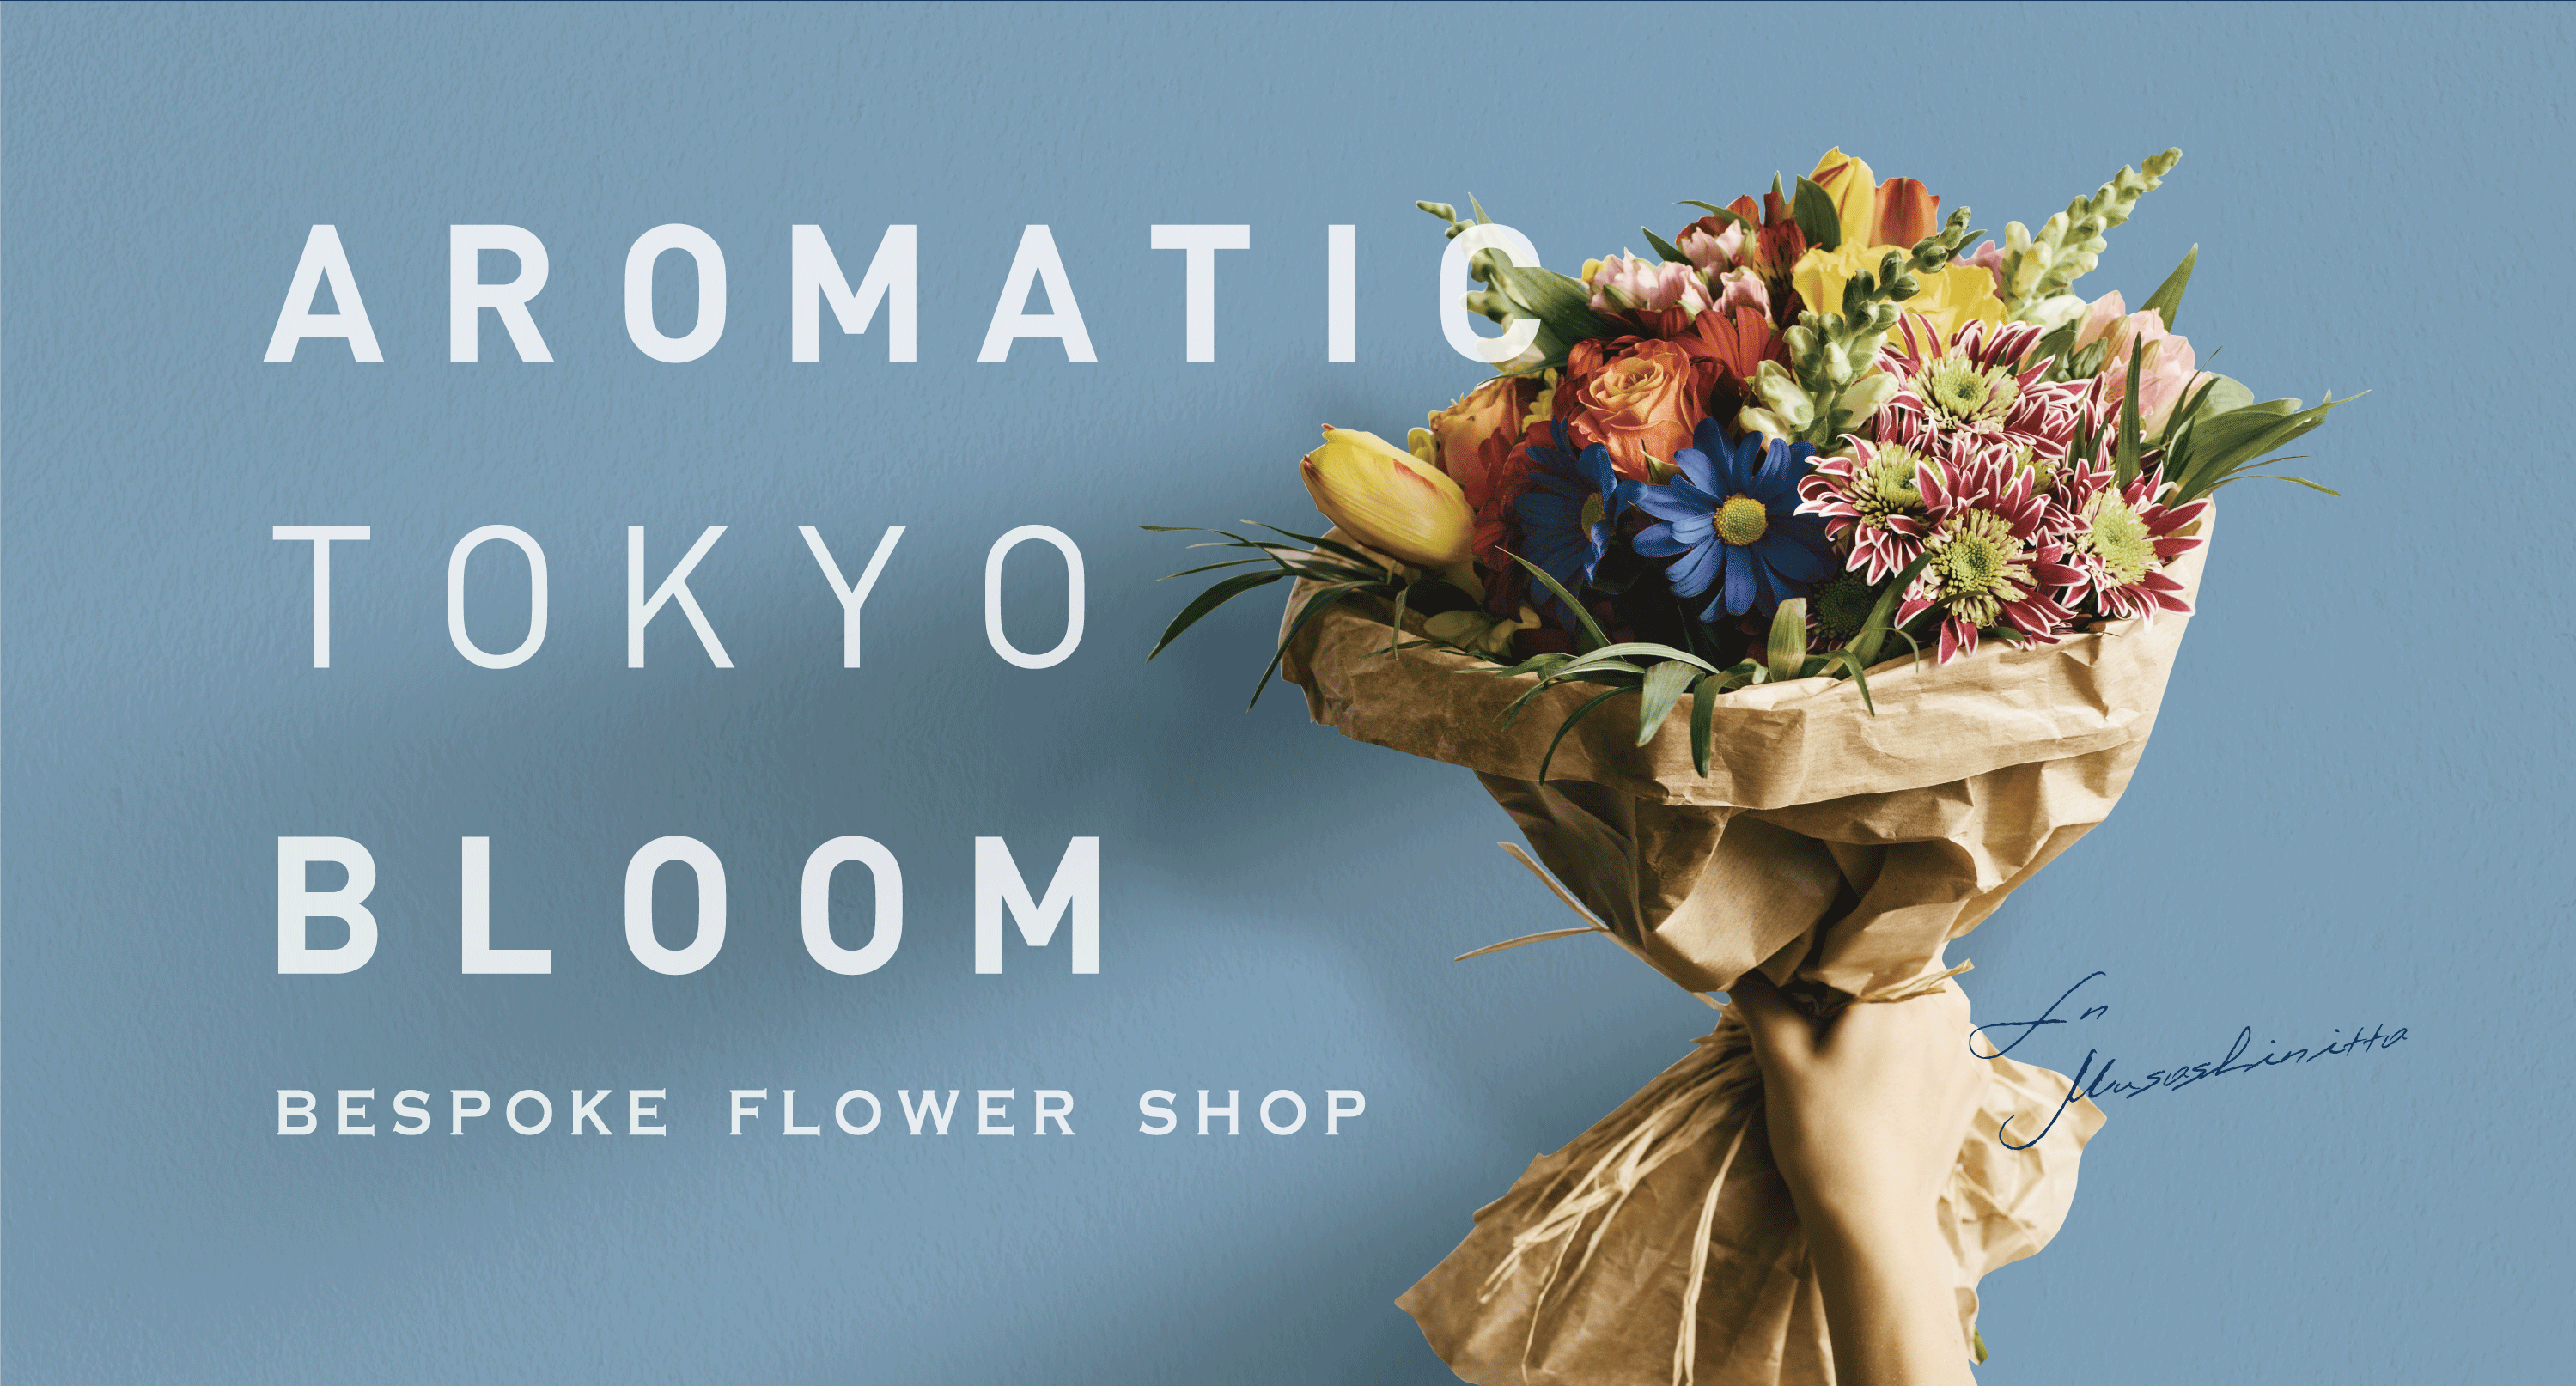 AROMATIC TOKYO BLOOM - BESPOKE FLOWER SHOP